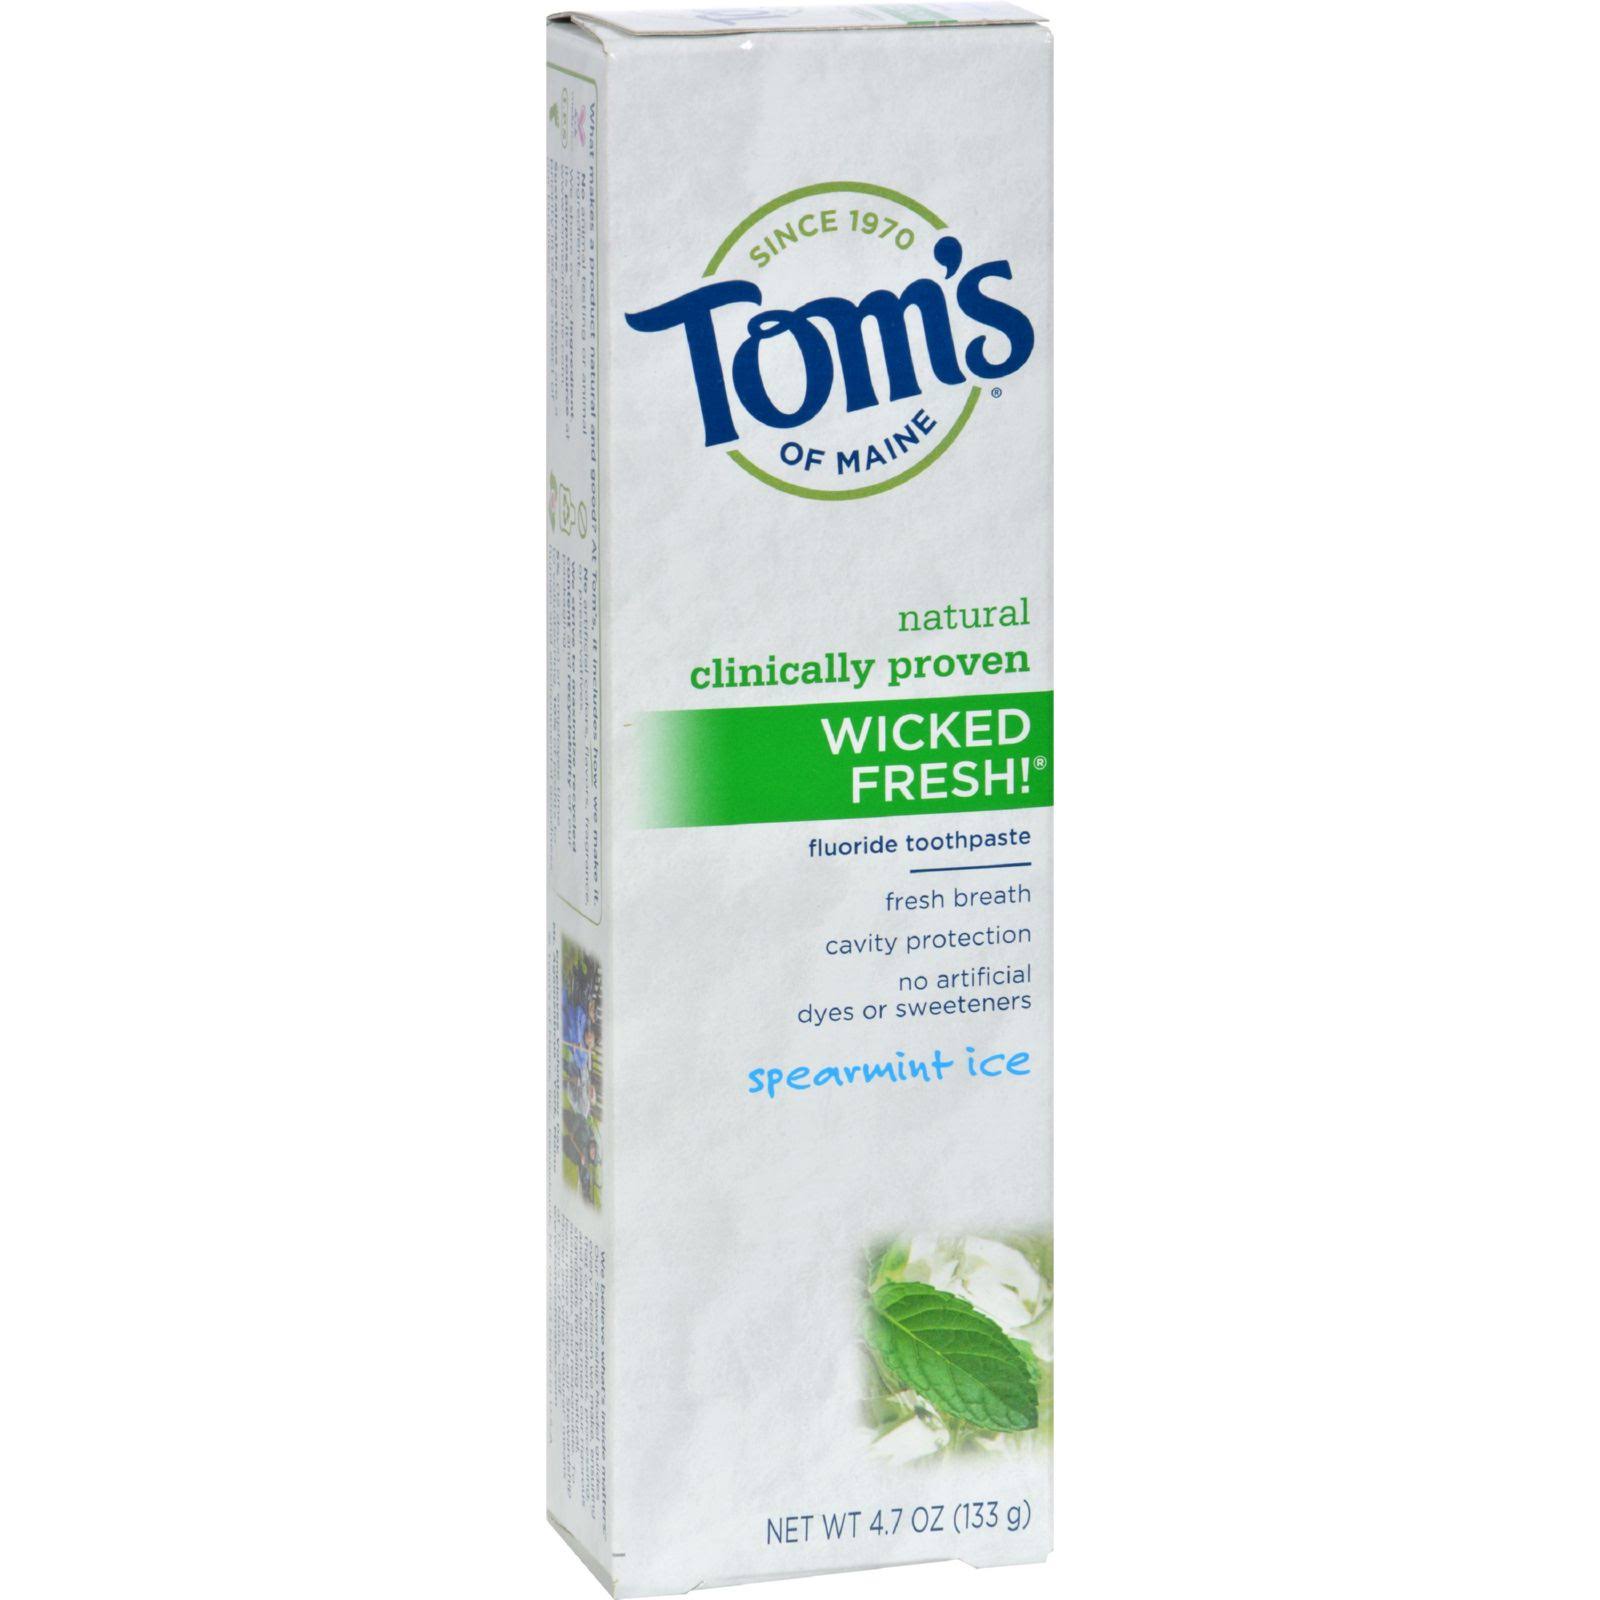 Tom's of Maine Wicked Fresh! Spearmint Ice Fluoride Toothpaste - 4.7 oz